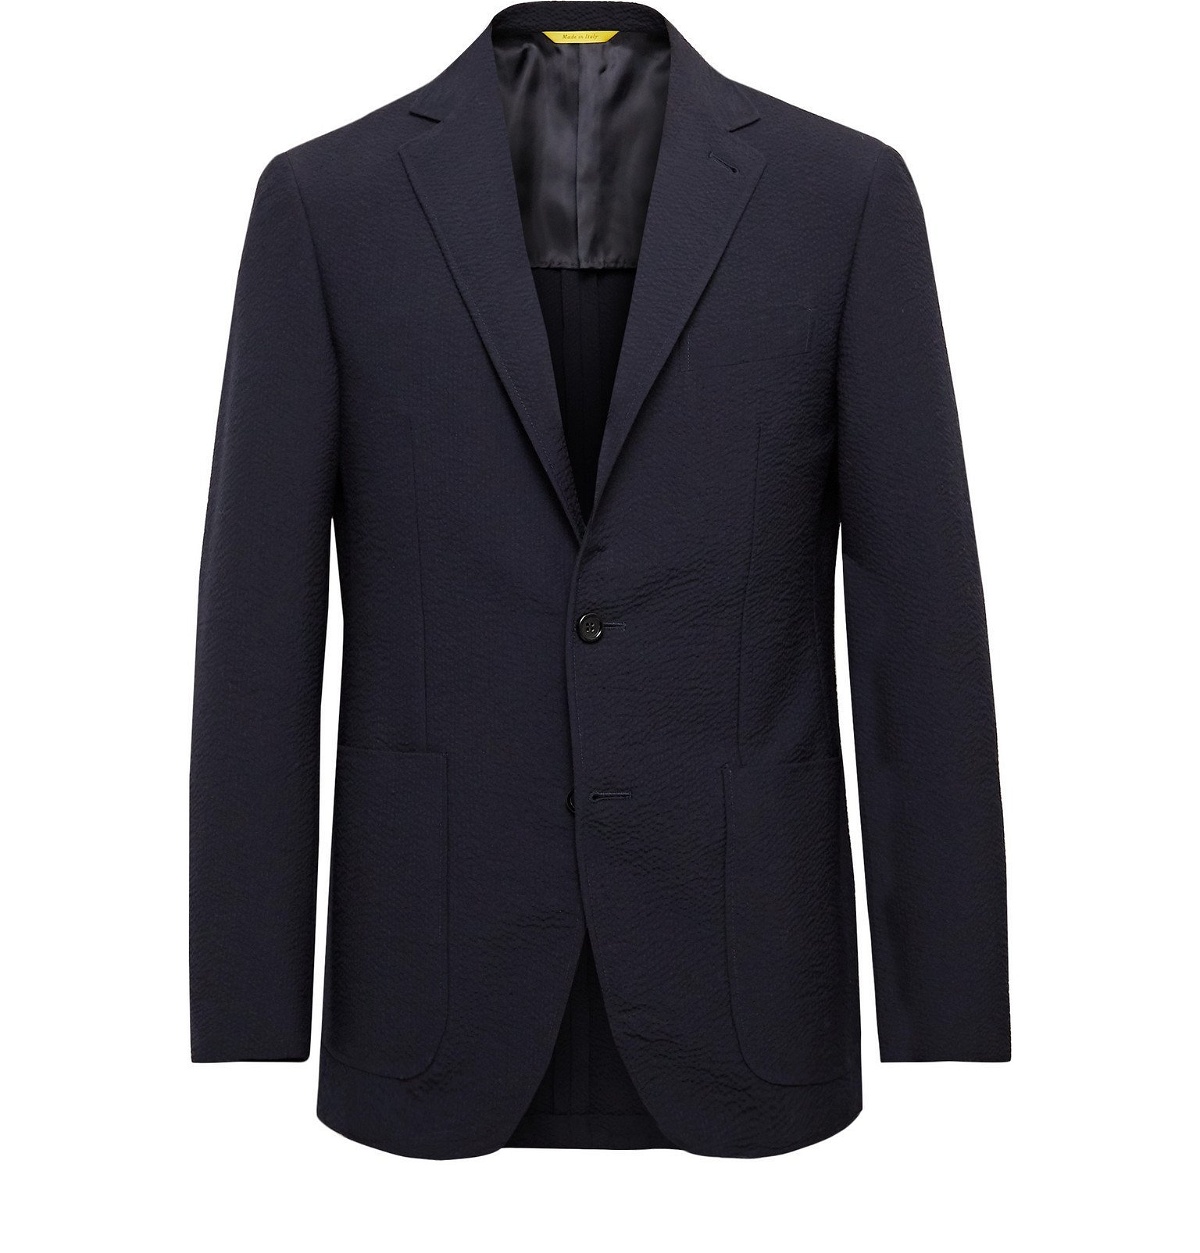 Canali - Kei Slim-Fit Wool-Blend Seersucker Suit Jacket - Blue Canali